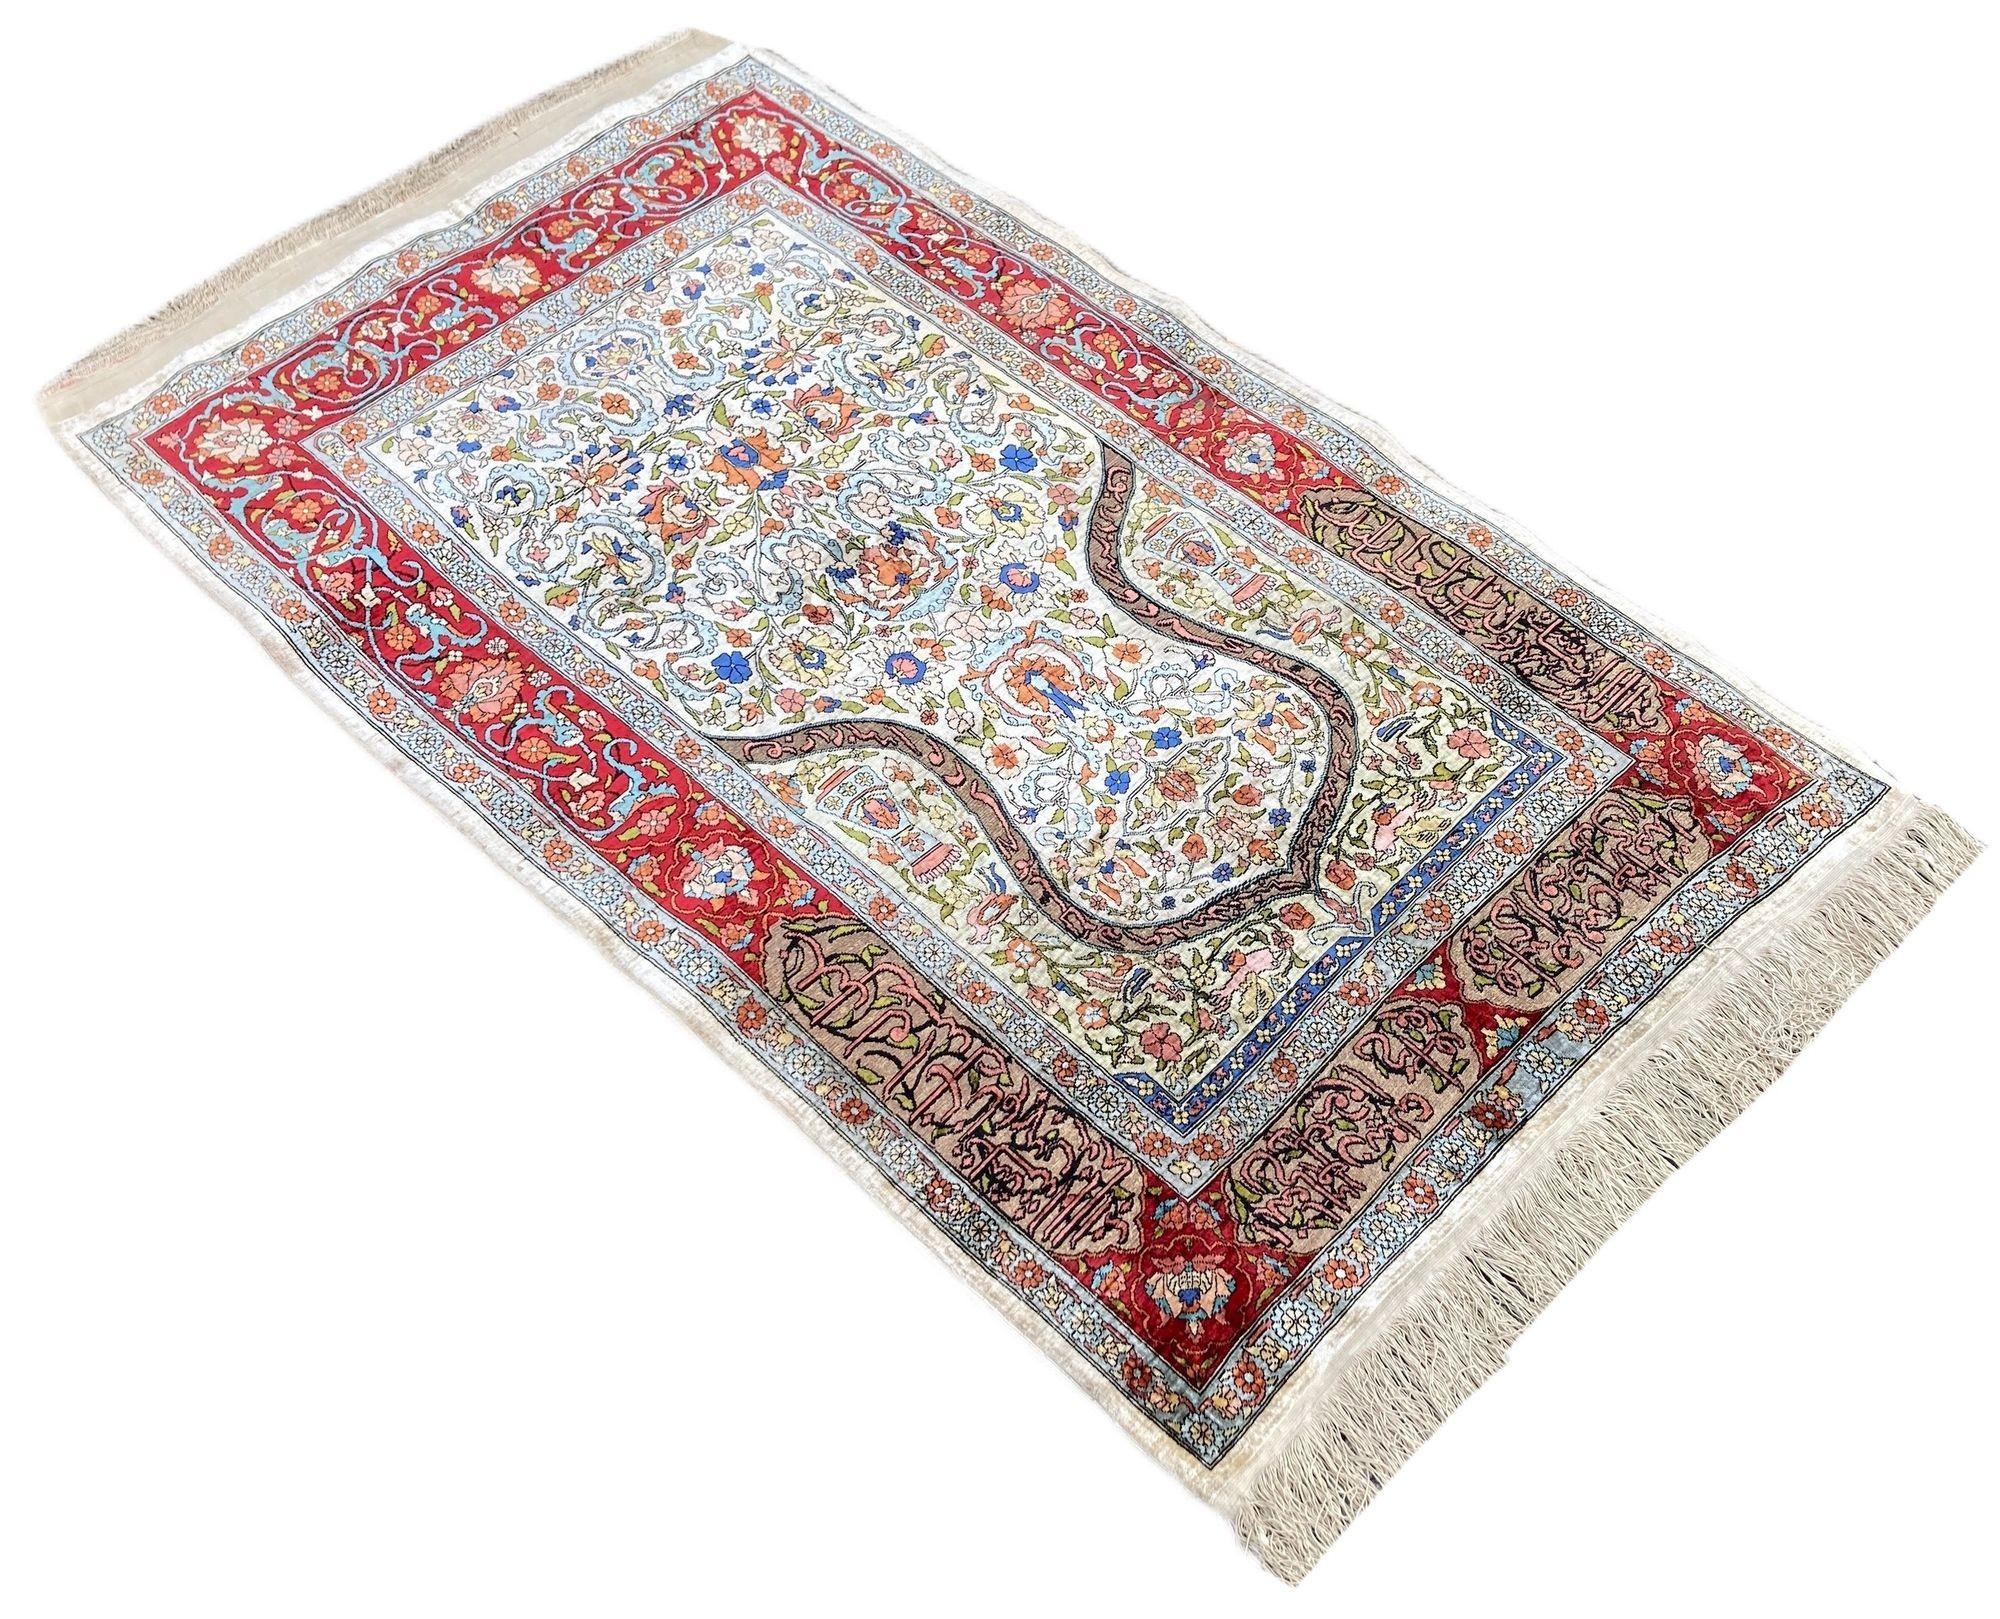 Late 20th Century Vintage Turkish Silk Hereke Rug 1.25m x 0.75m For Sale